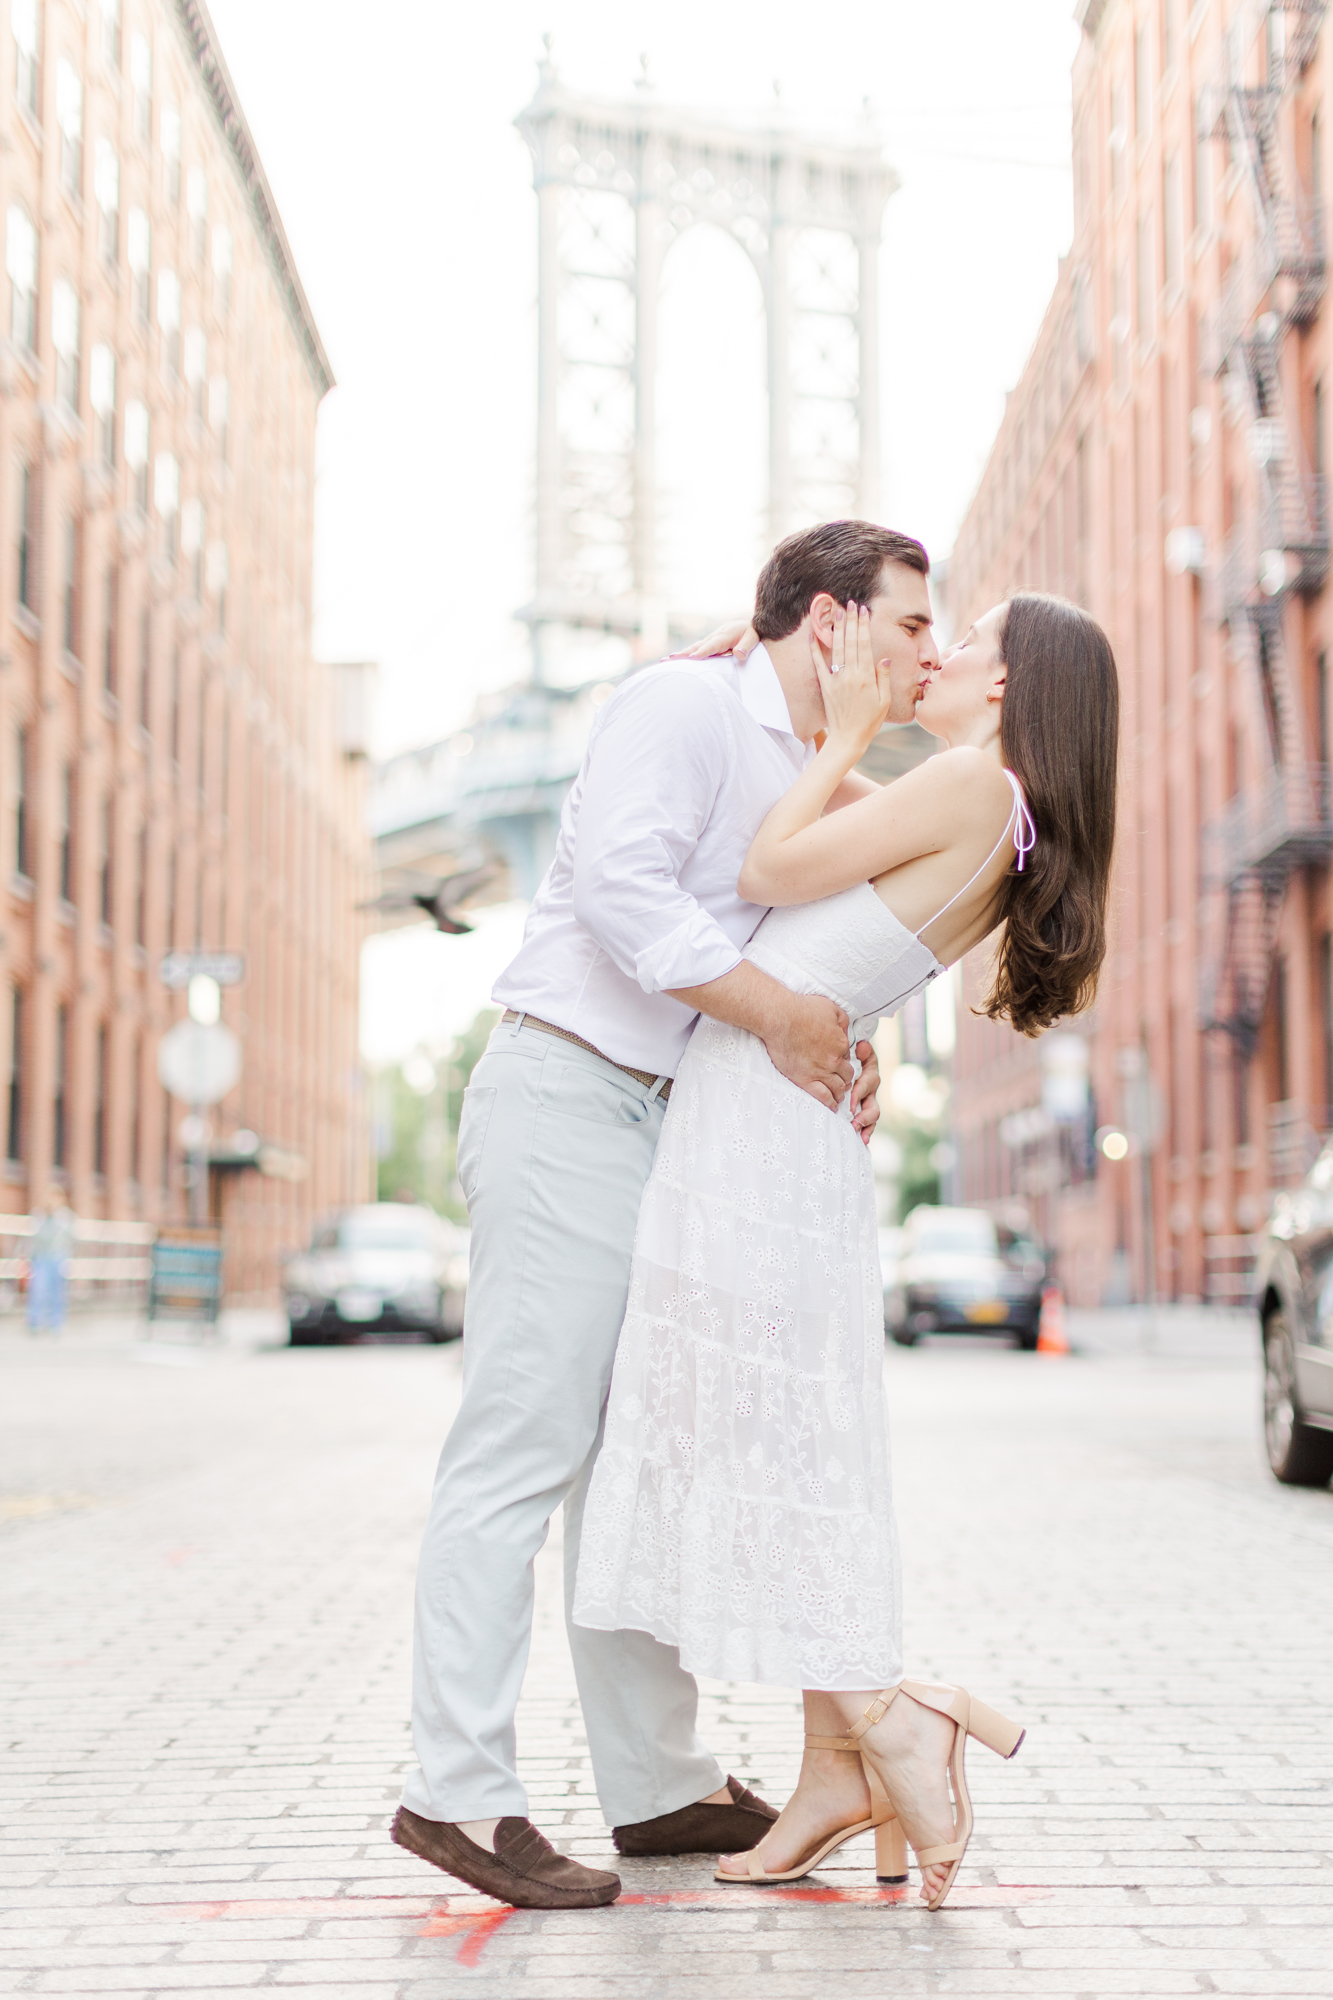 Joyous Brooklyn Bridge Engagement Photography